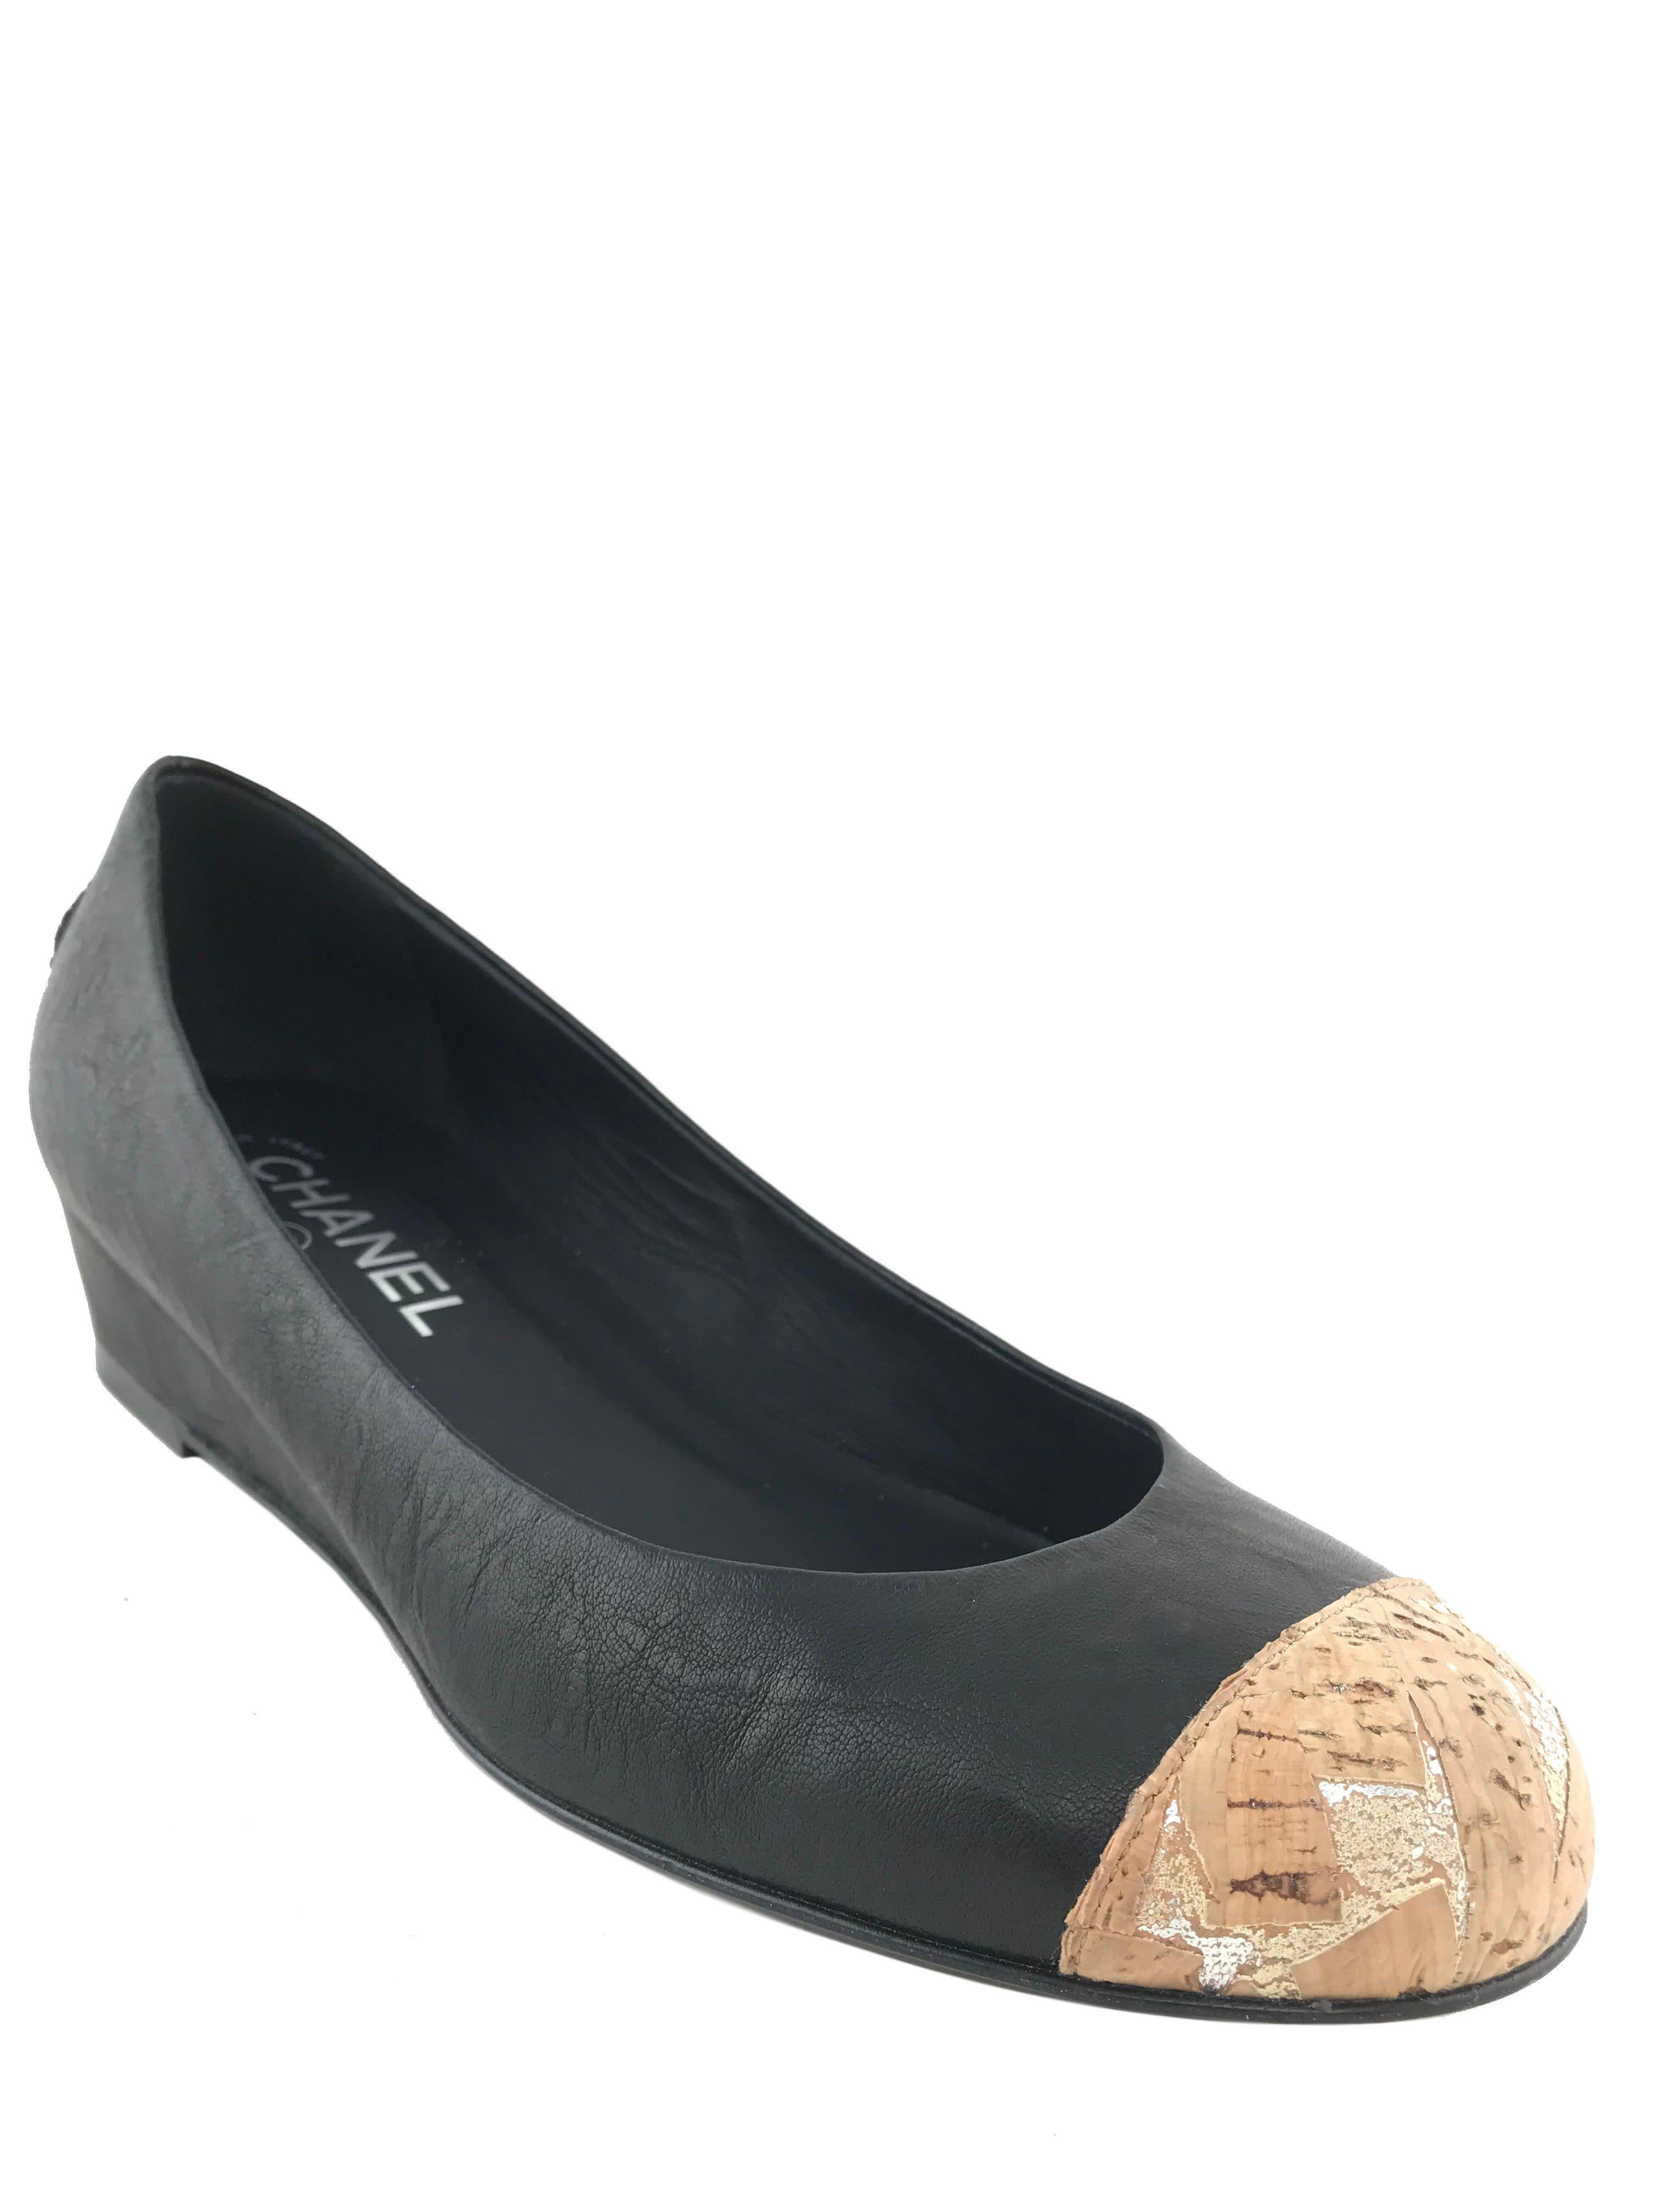 Chanel gold logo mules sandals black lambskin leather/cork